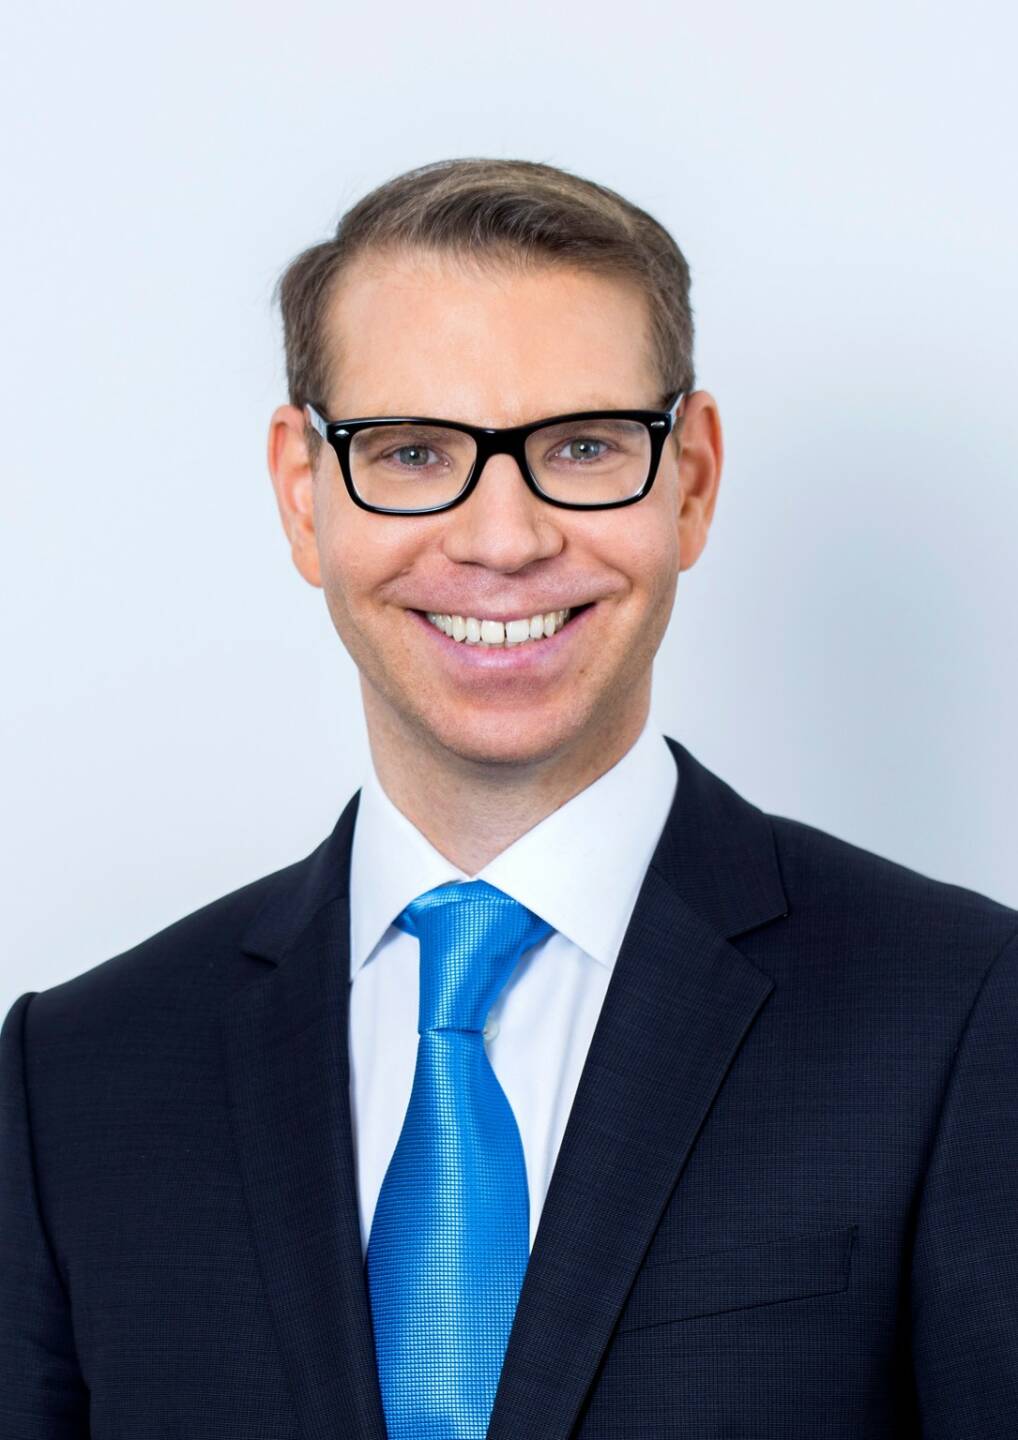 Andreas Bonelli ist mit Jänner 2020 als Rechtsanwalt (Senior Associate) Teil des Praxisbereichs Corporate M&A und Banking & Finance bei Jank Weiler Operenyi/Deloitte Legal.Credit: feelimage/Deloitte